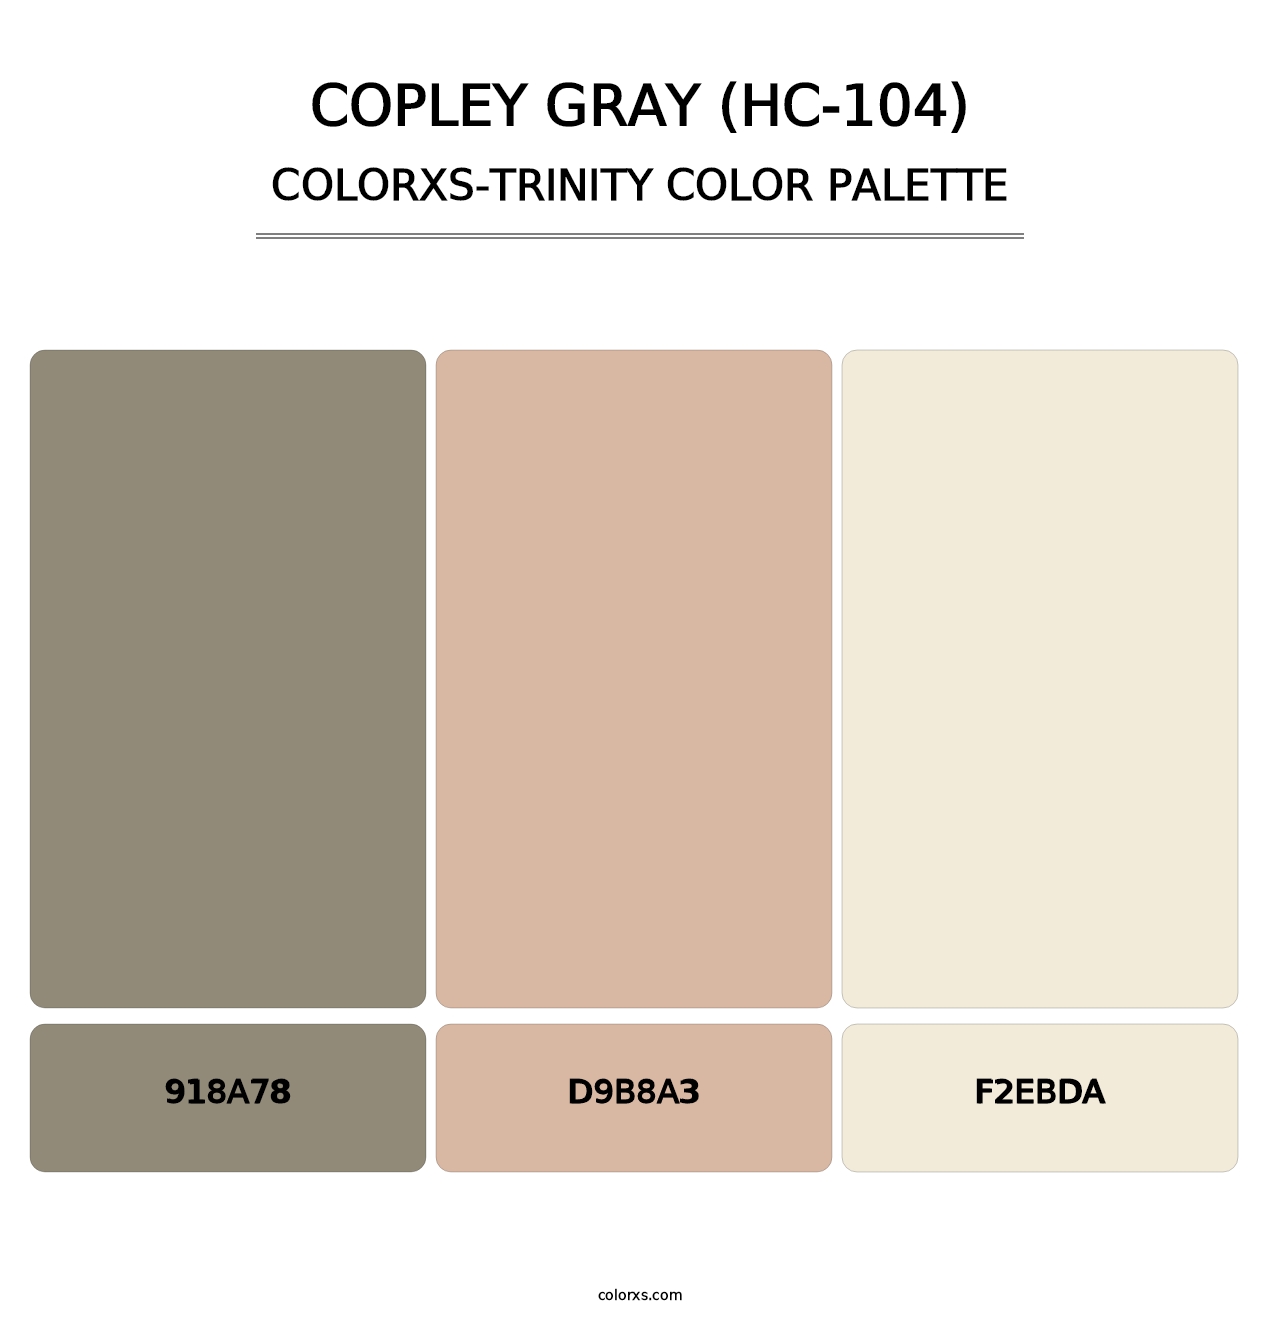 Copley Gray (HC-104) - Colorxs Trinity Palette